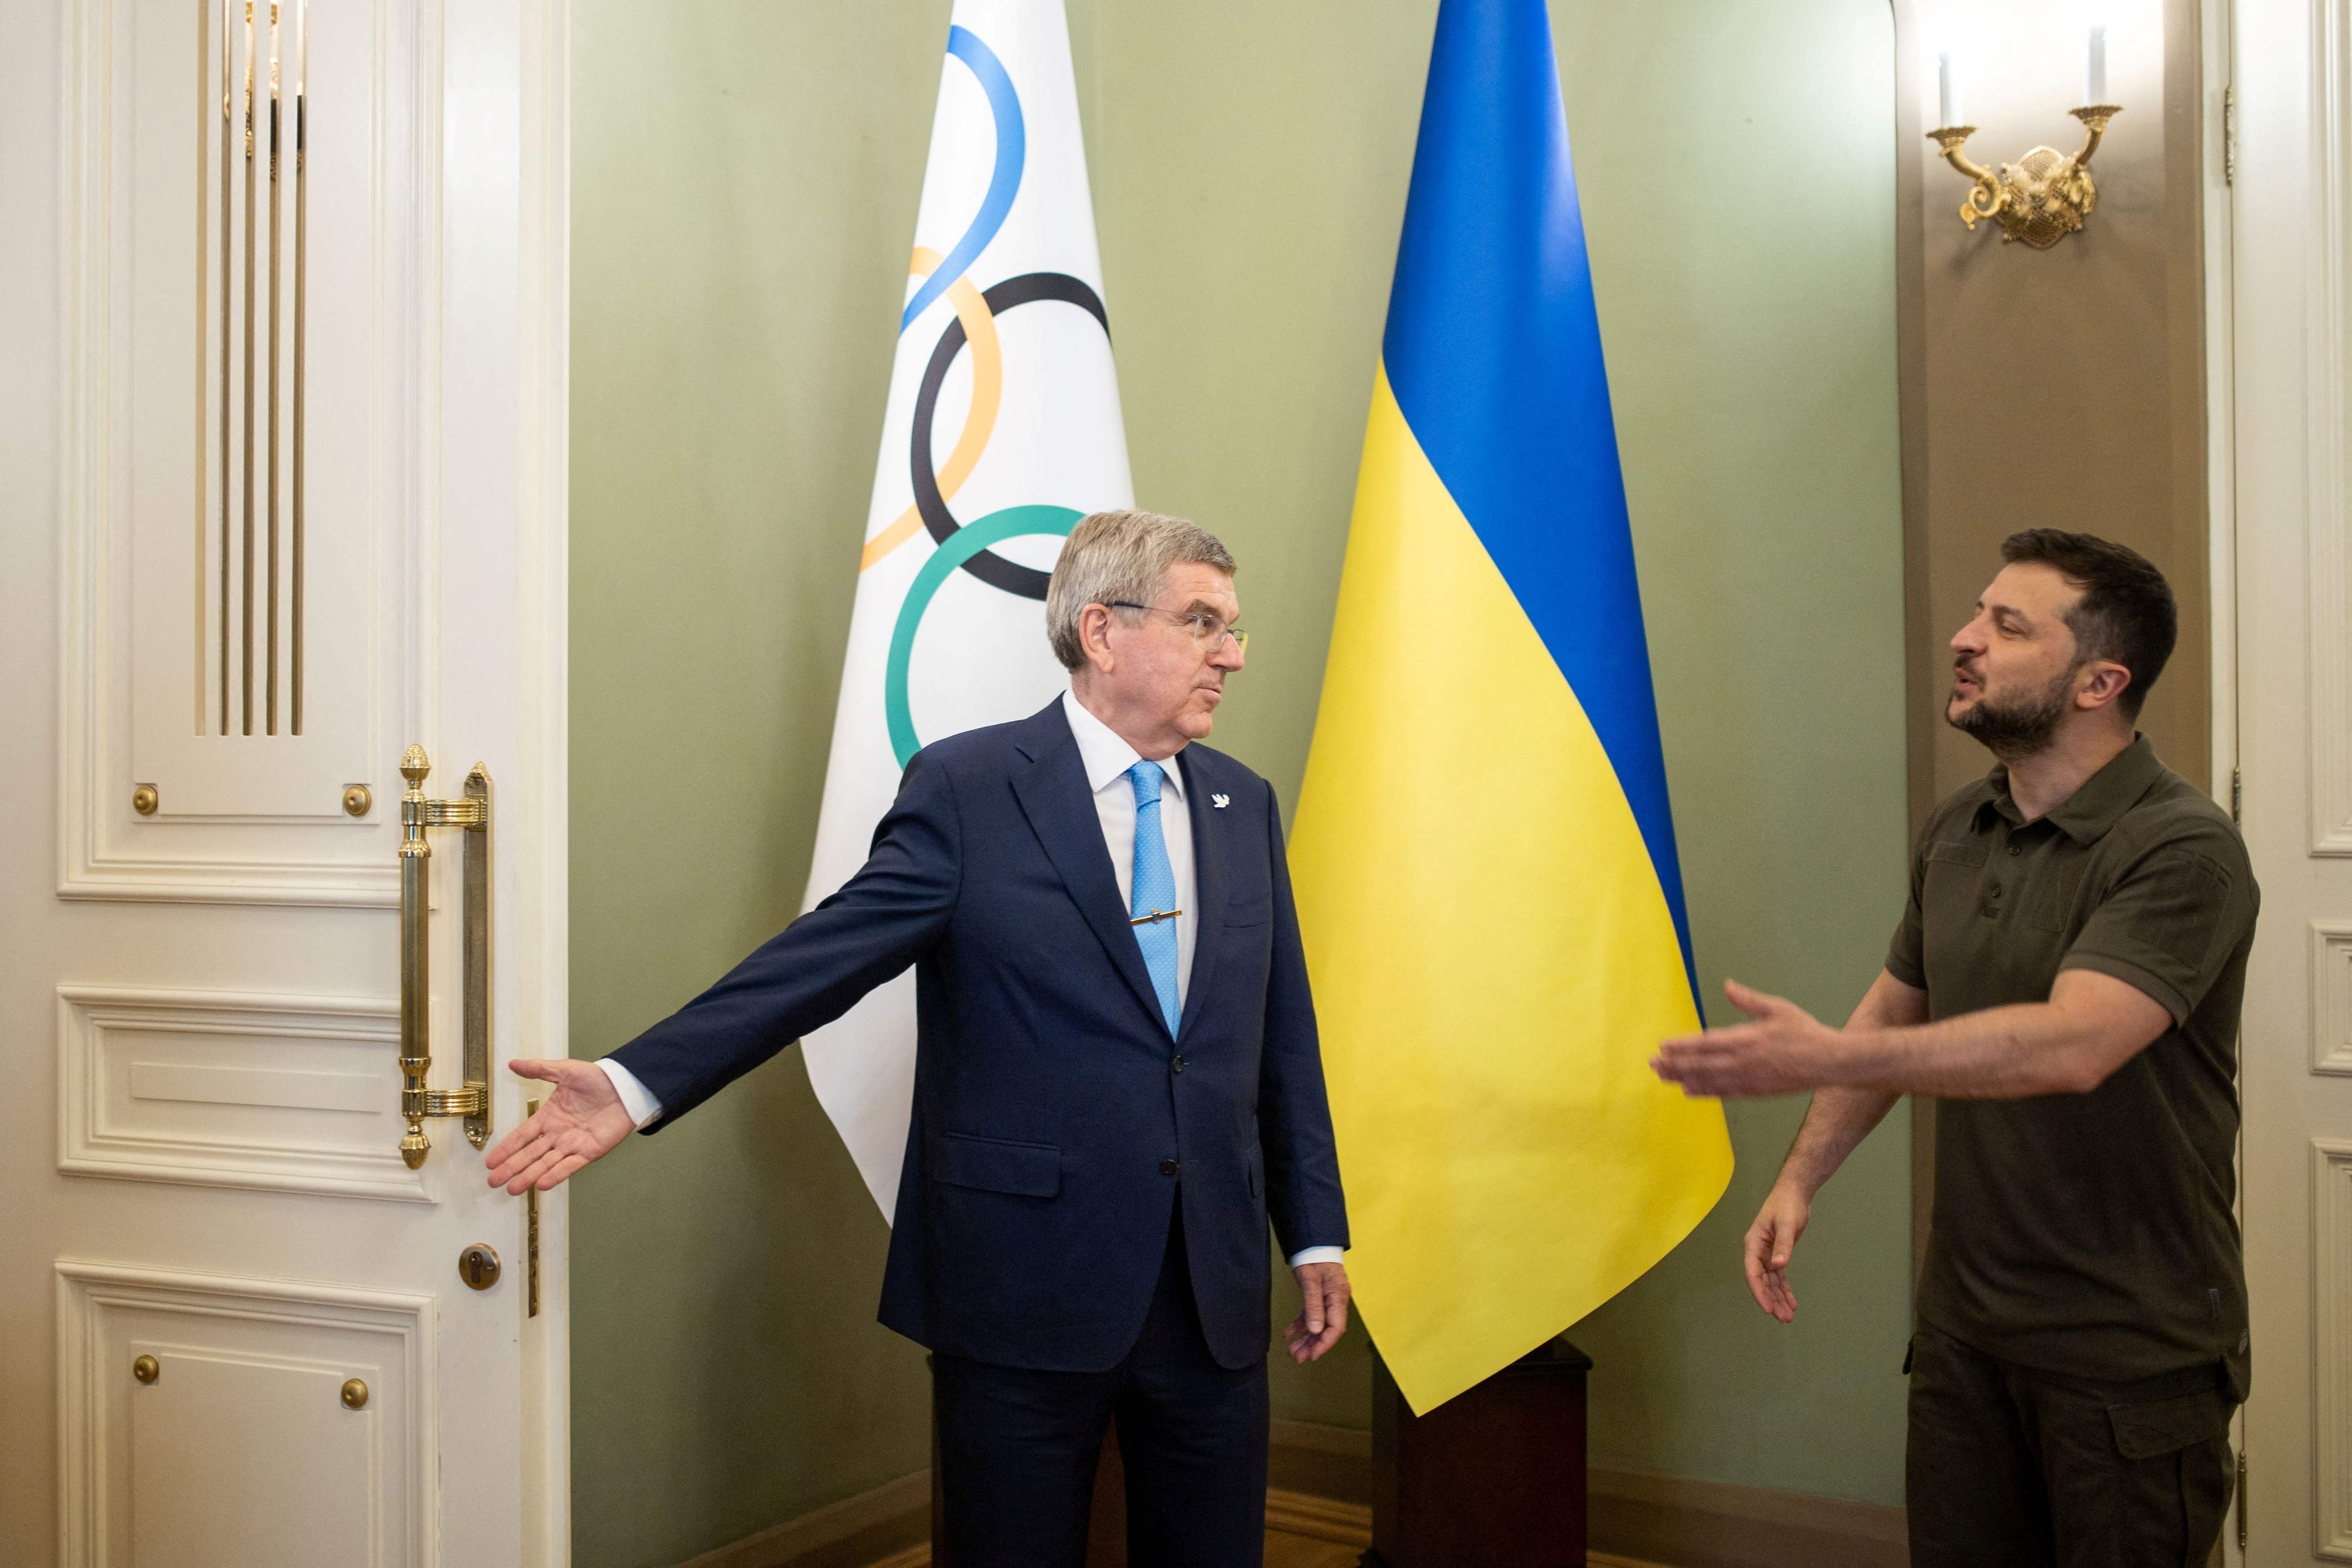 IOC president Thomas Bach and Ukrainian president Volodymyr Zelensky